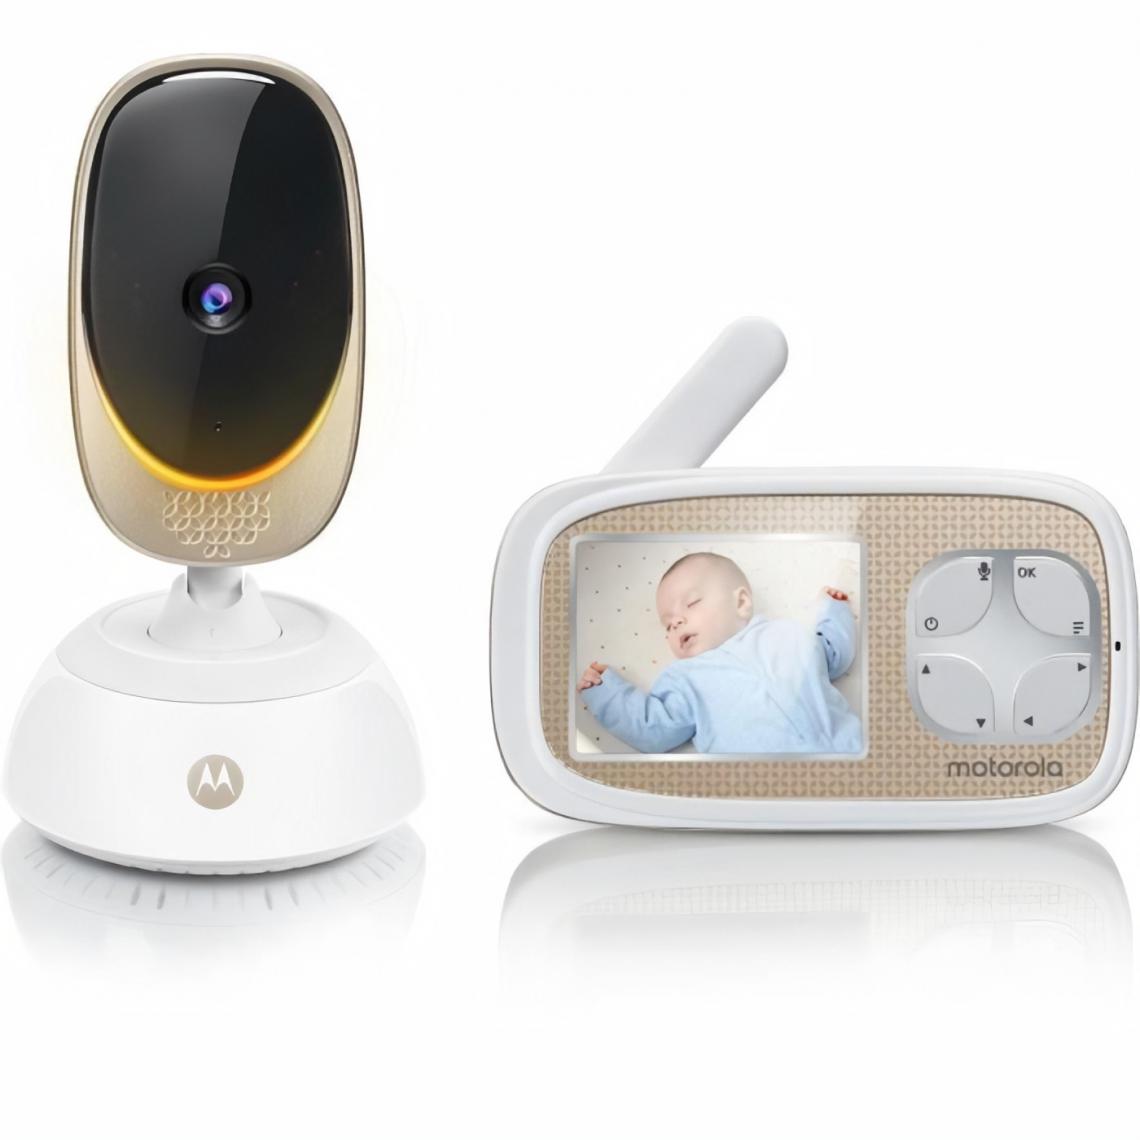 Motorola Baby - MOTOROLA BABY Comfort 45 connect 2 en 1 (wifi sur smartphone + ecran video 2,8) alerte mouvements - Babyphone connecté